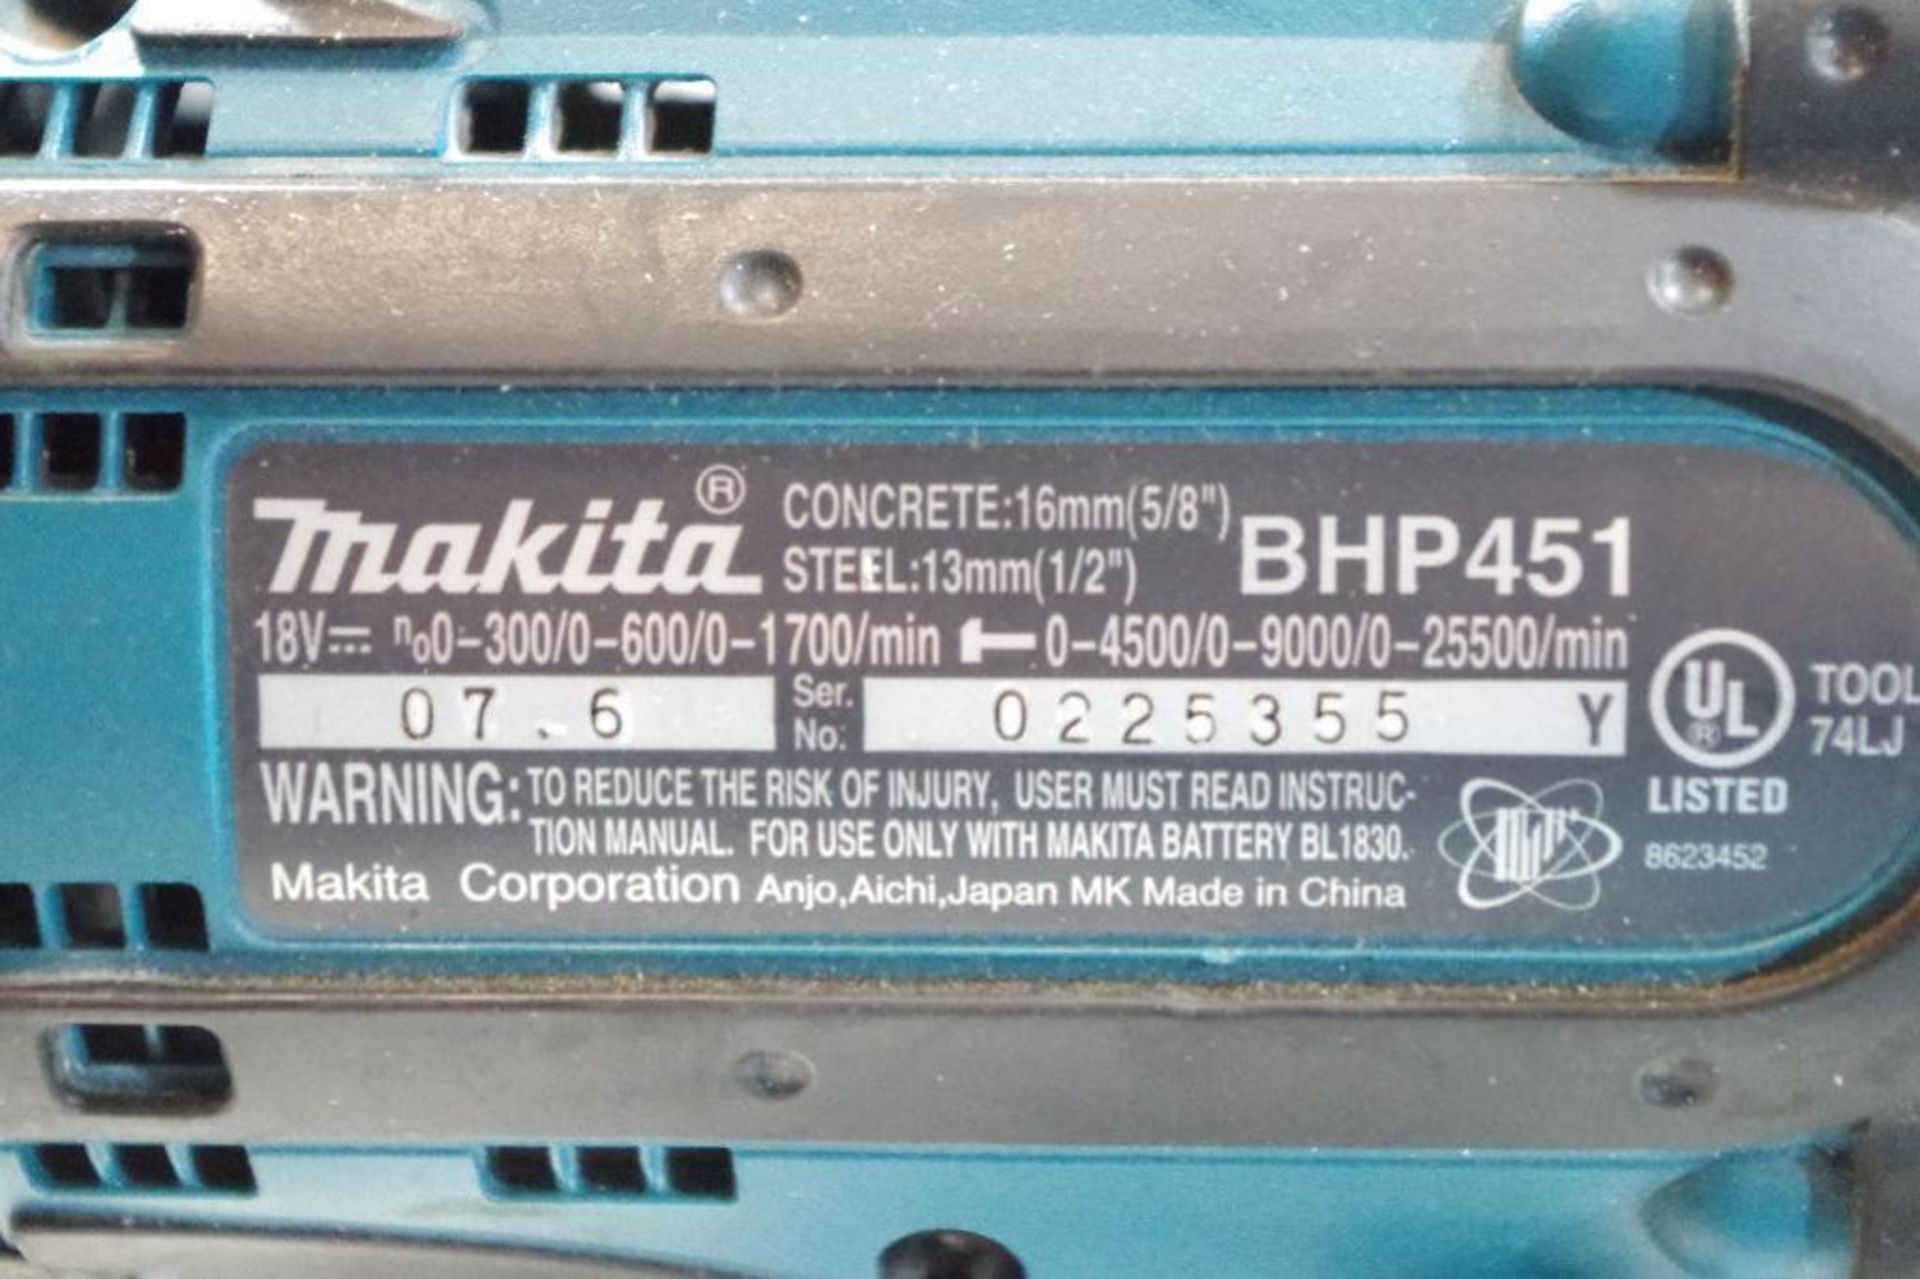 MAKITA 18V Drill Driver M/N BHP451, Battery, Handle & Case, NO Charger - Image 2 of 4